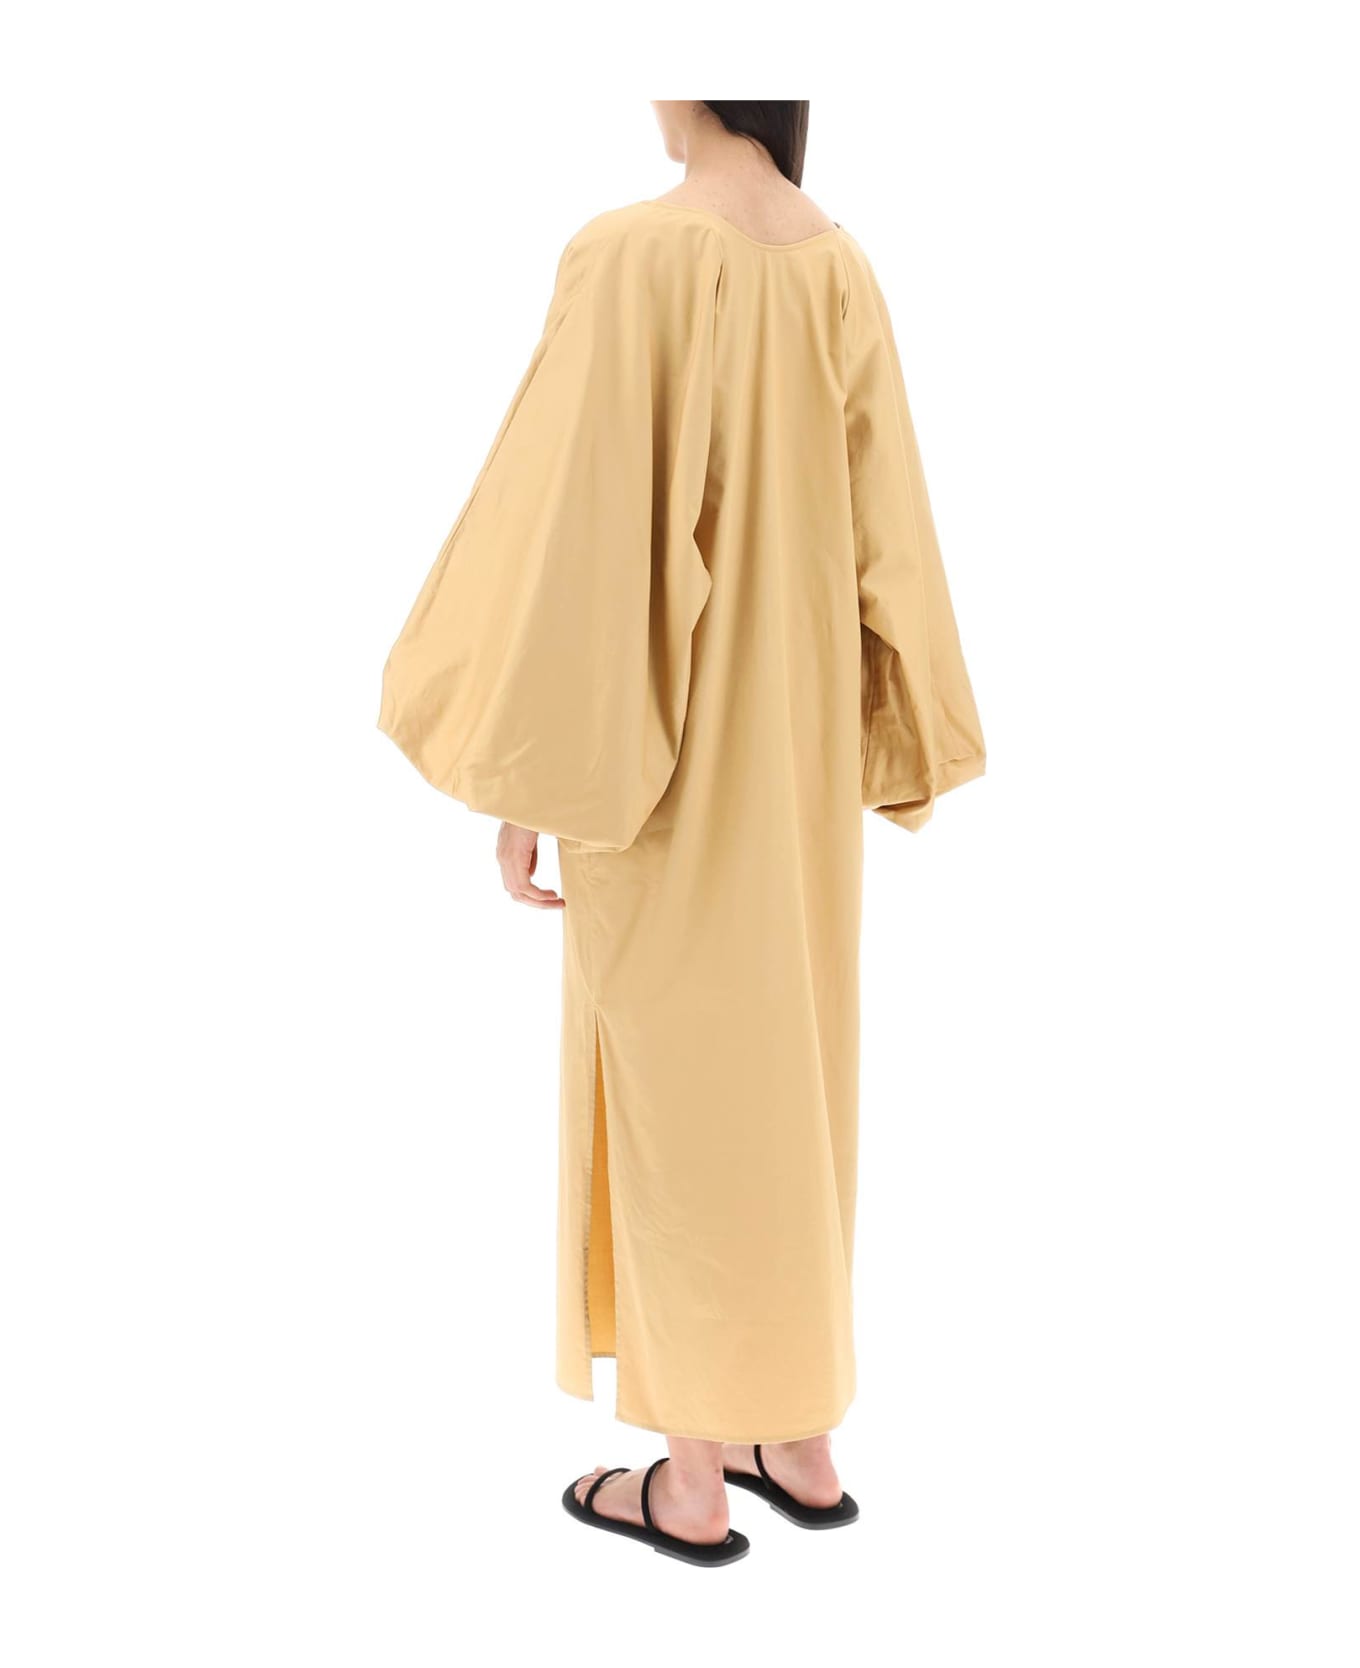 By Malene Birger Parida Maxi Dress In Organic Cotton - LIGHT CAMEL (Beige)